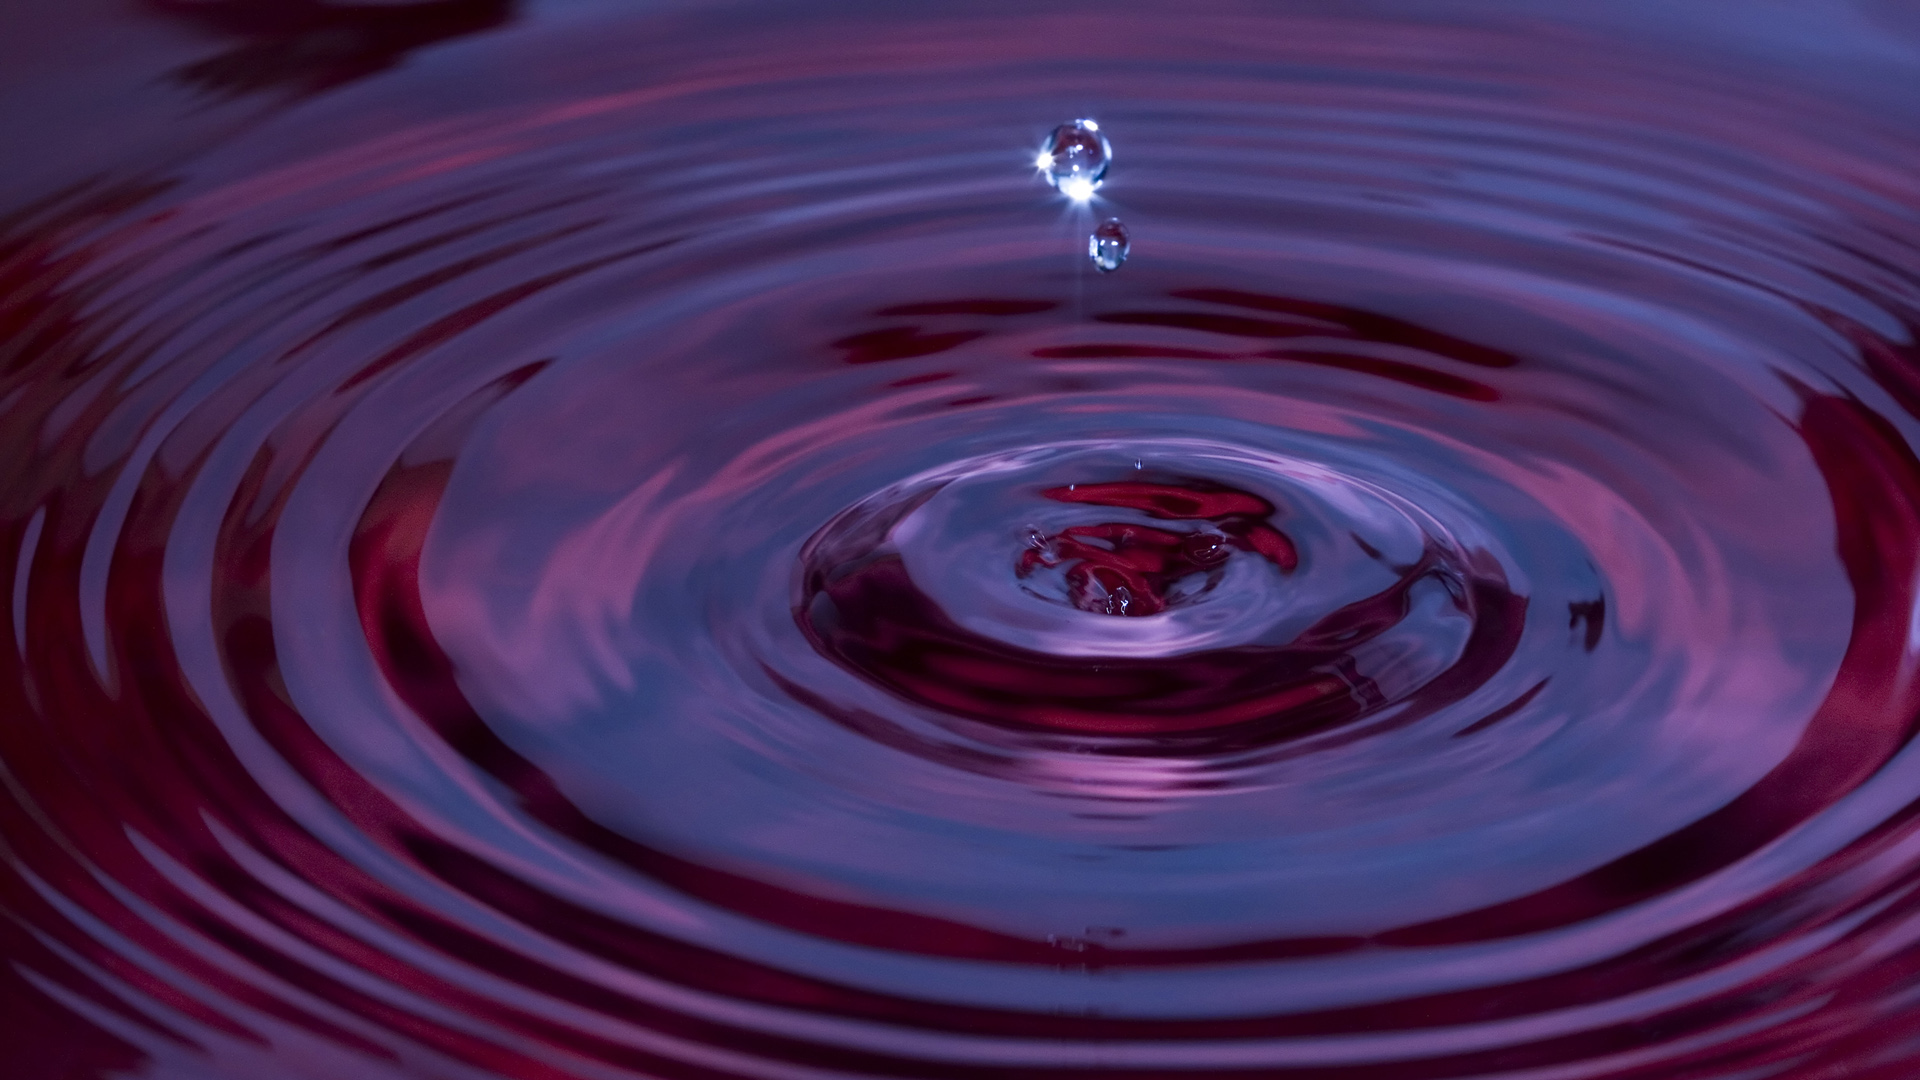 Earth Water Drop HD Wallpaper | Background Image